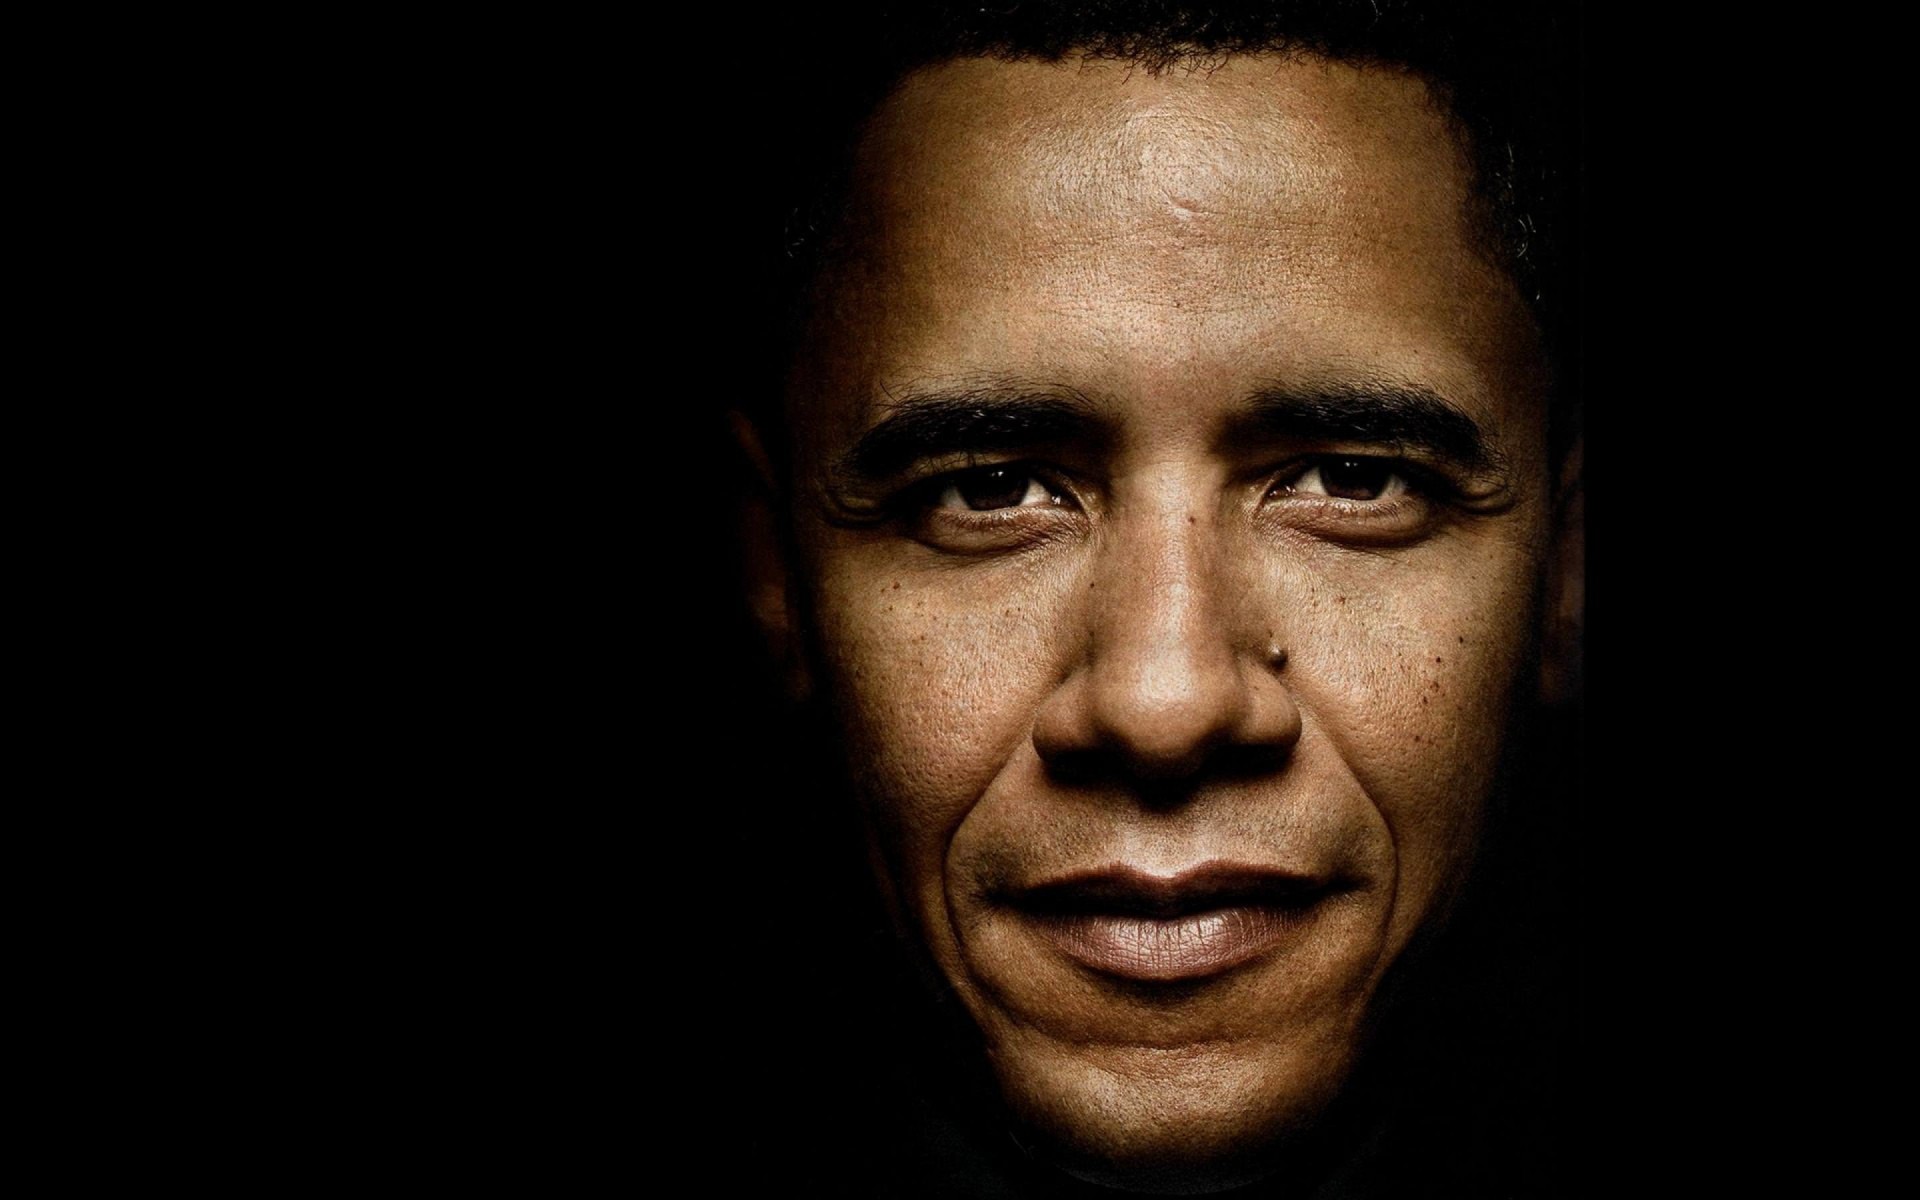 President Barack Obama Portrait Wallpaper for Desktop 1920x1200